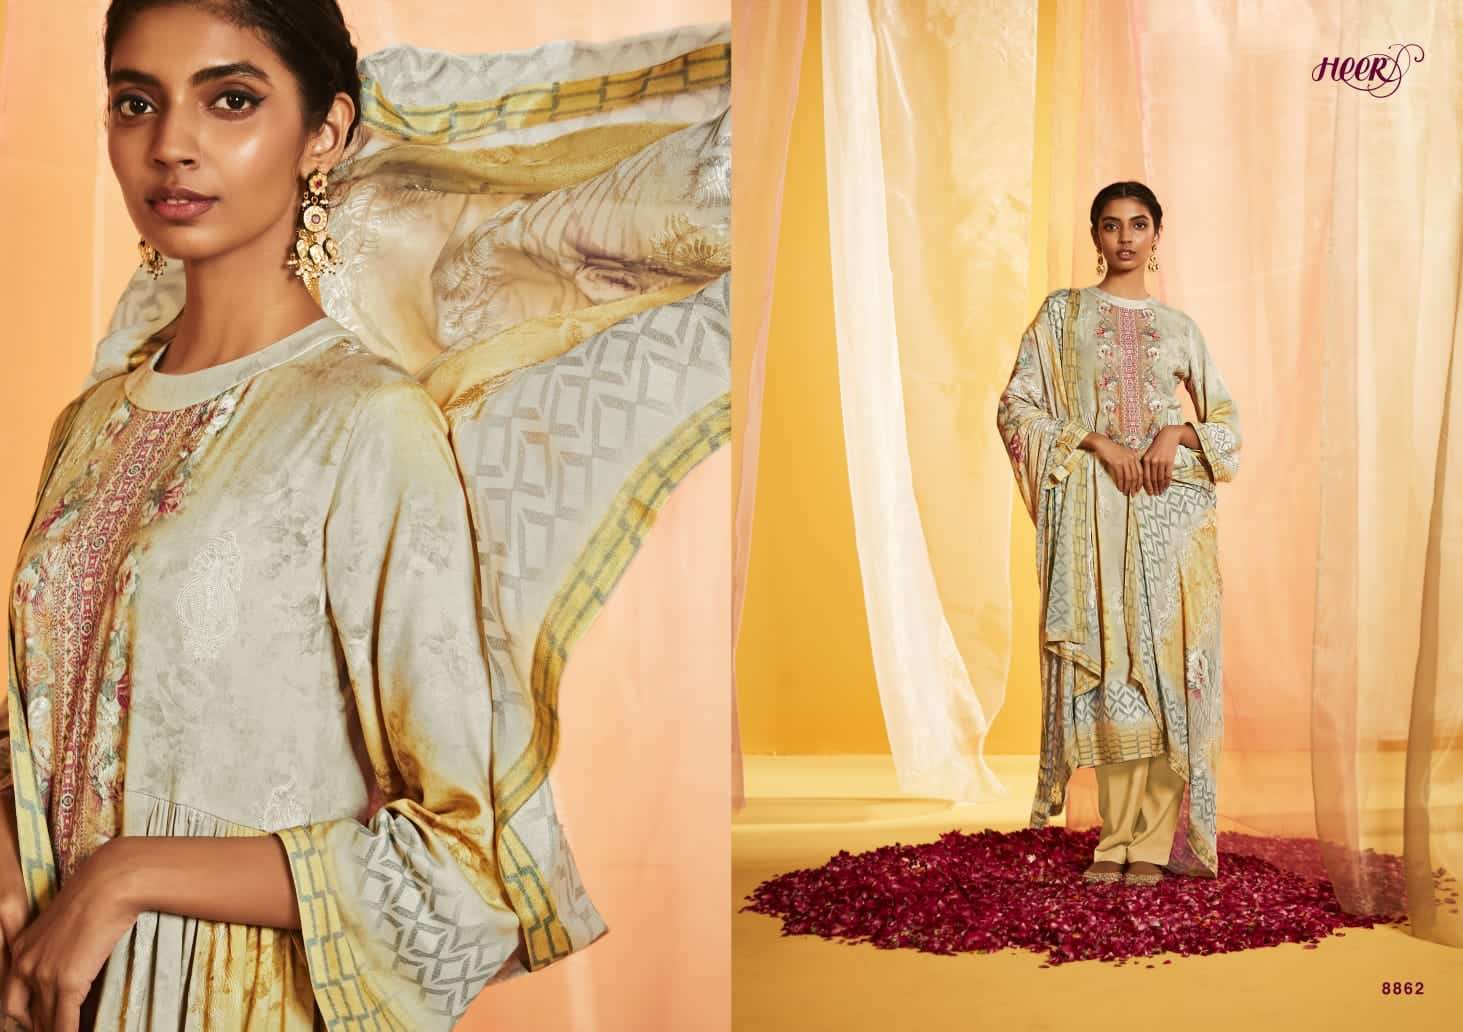 kimora fashion gul meera 8861-8868 series exclusive designer salwar kameez online supplier surat 